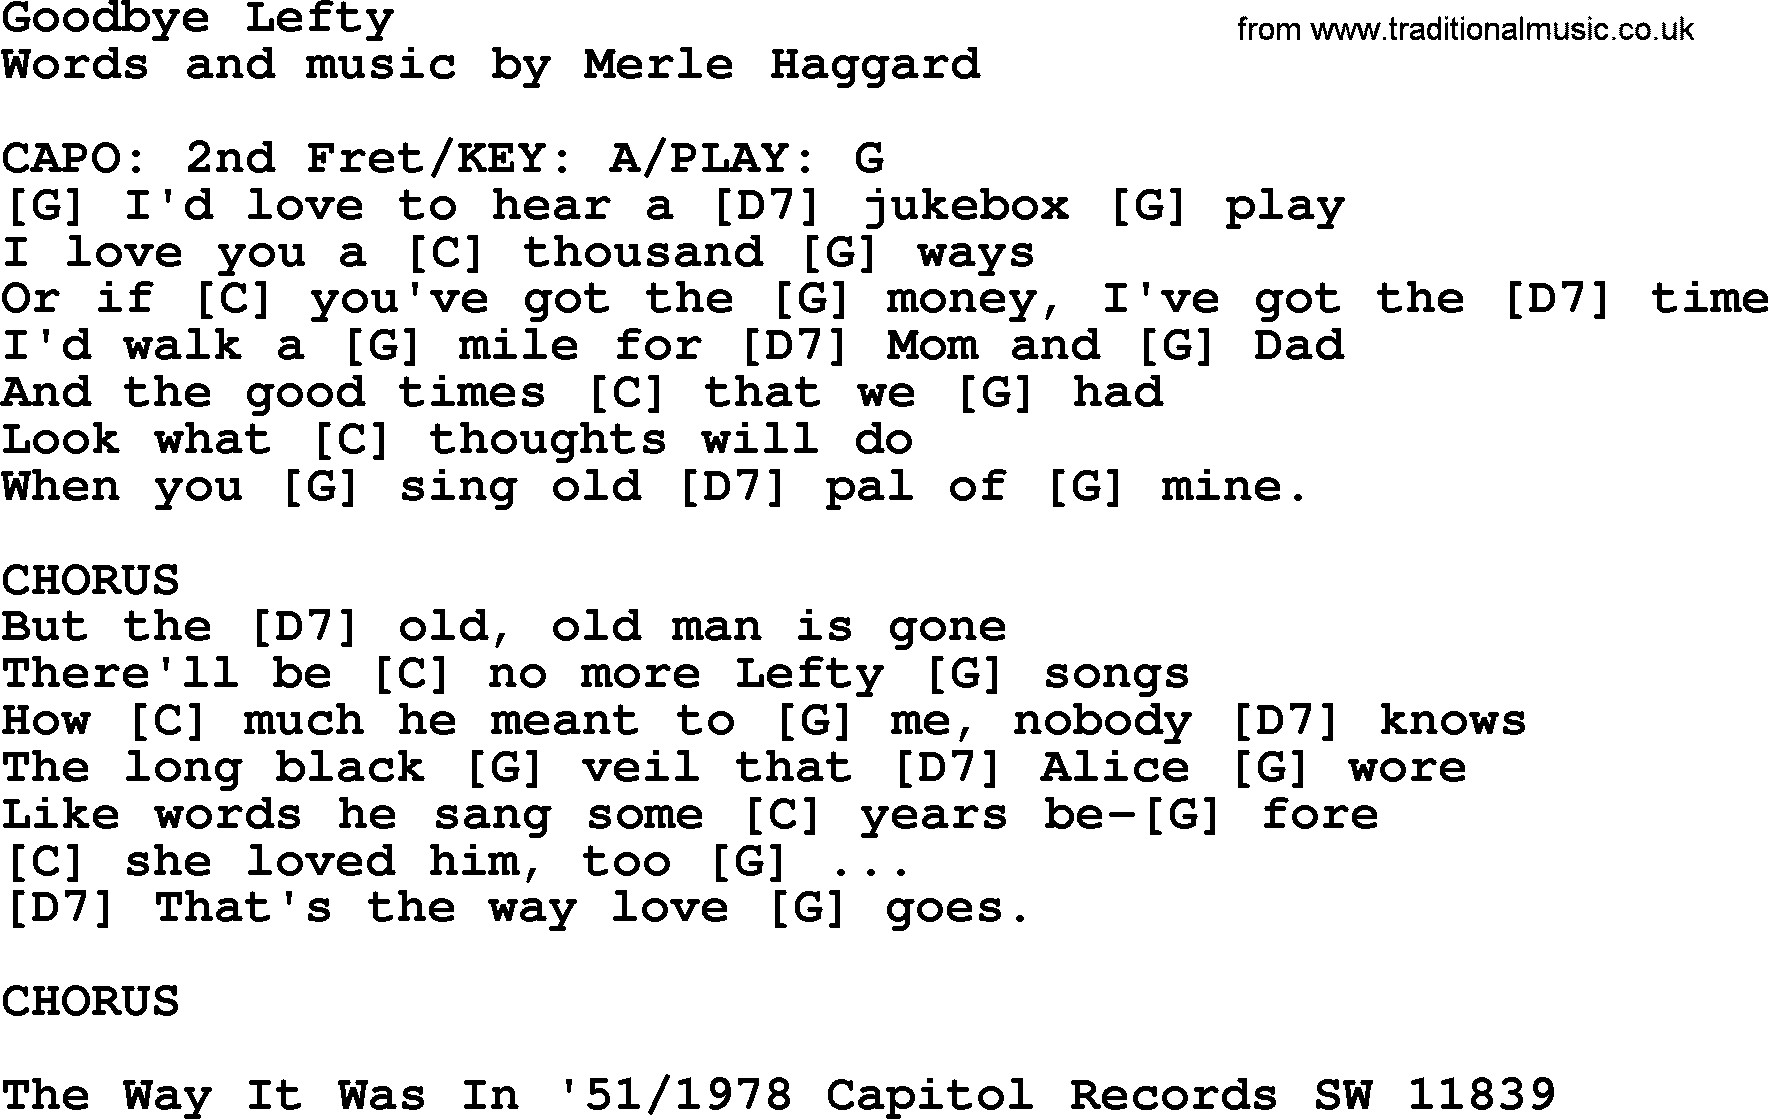 Merle Haggard song: Goodbye Lefty, lyrics and chords